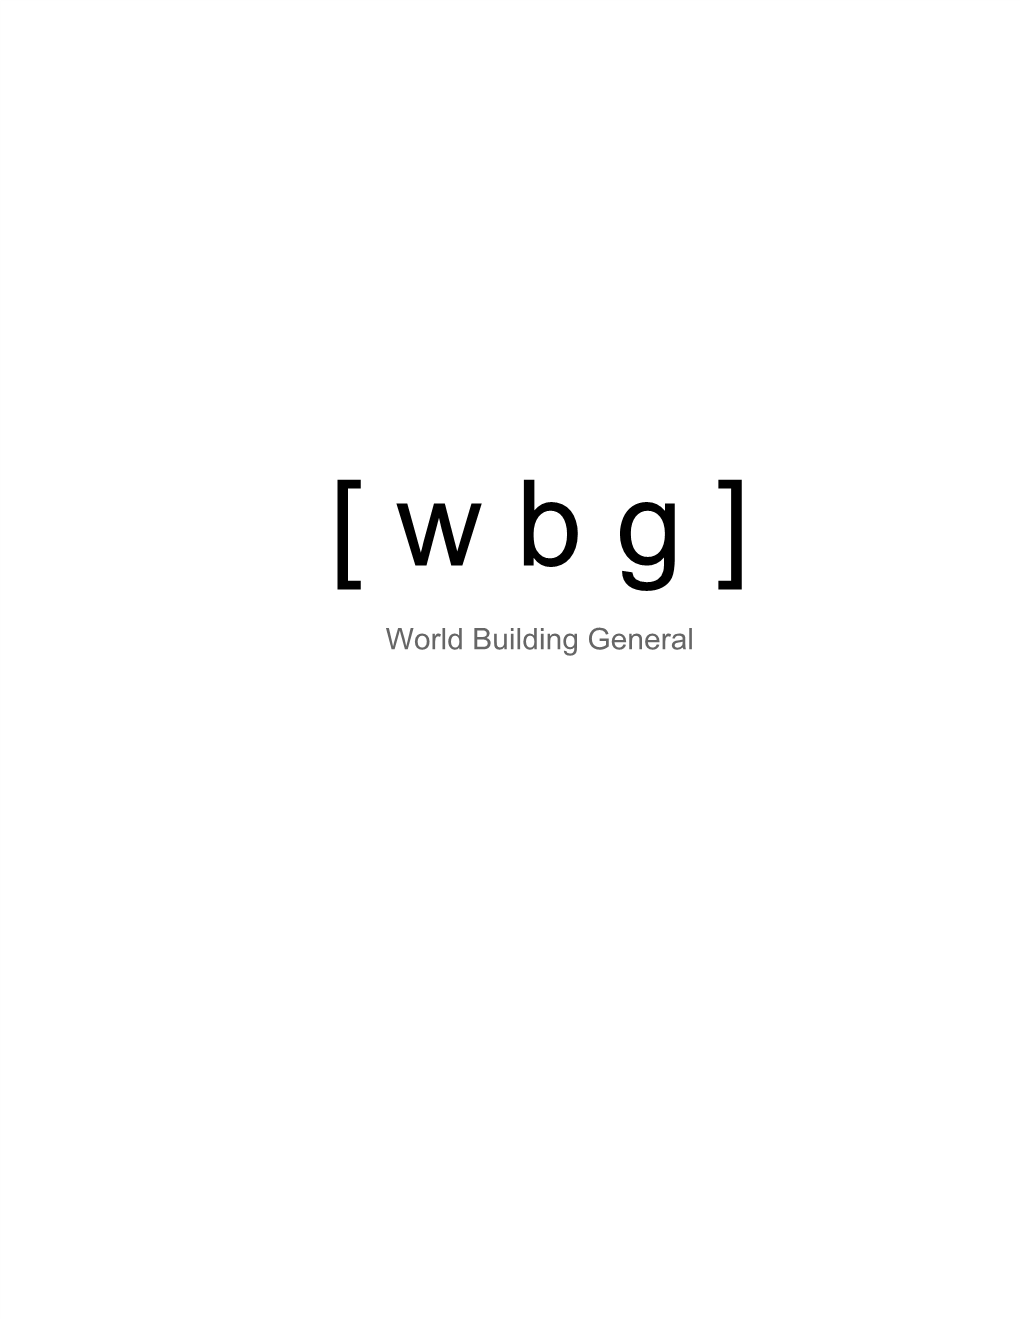 World Building General